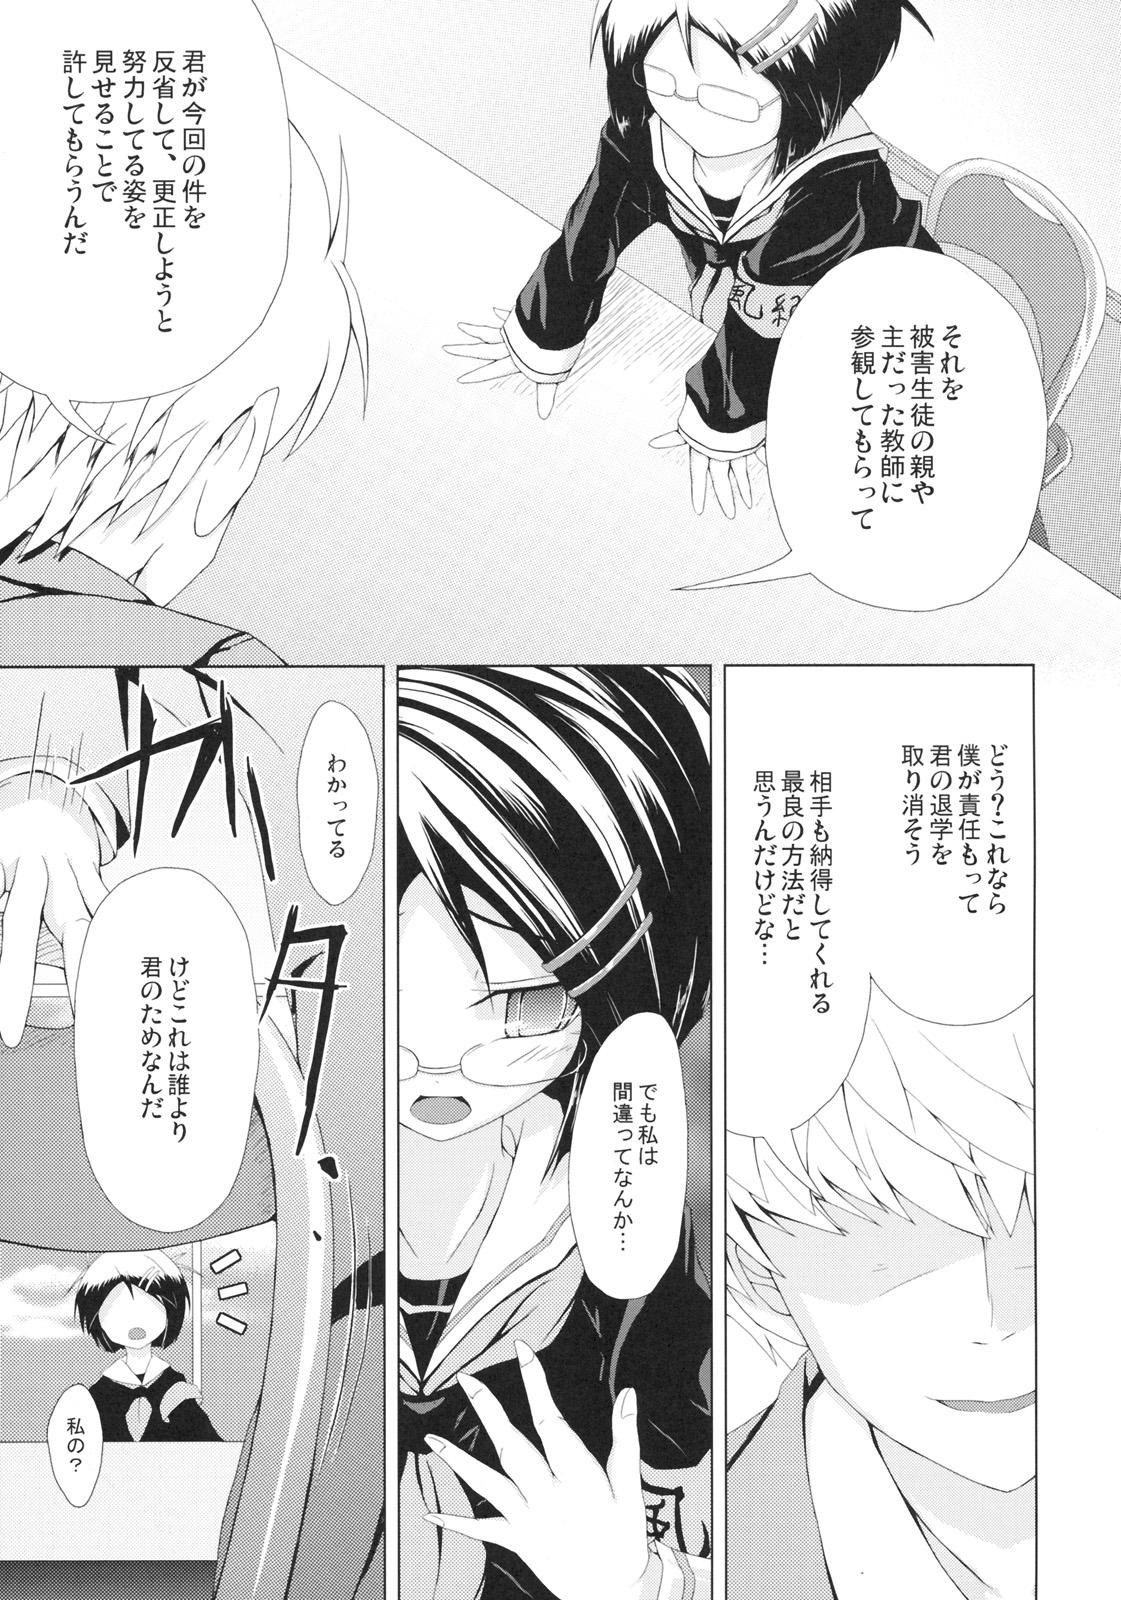 Best Blowjob Fuuki no Midare Blowjob - Page 6